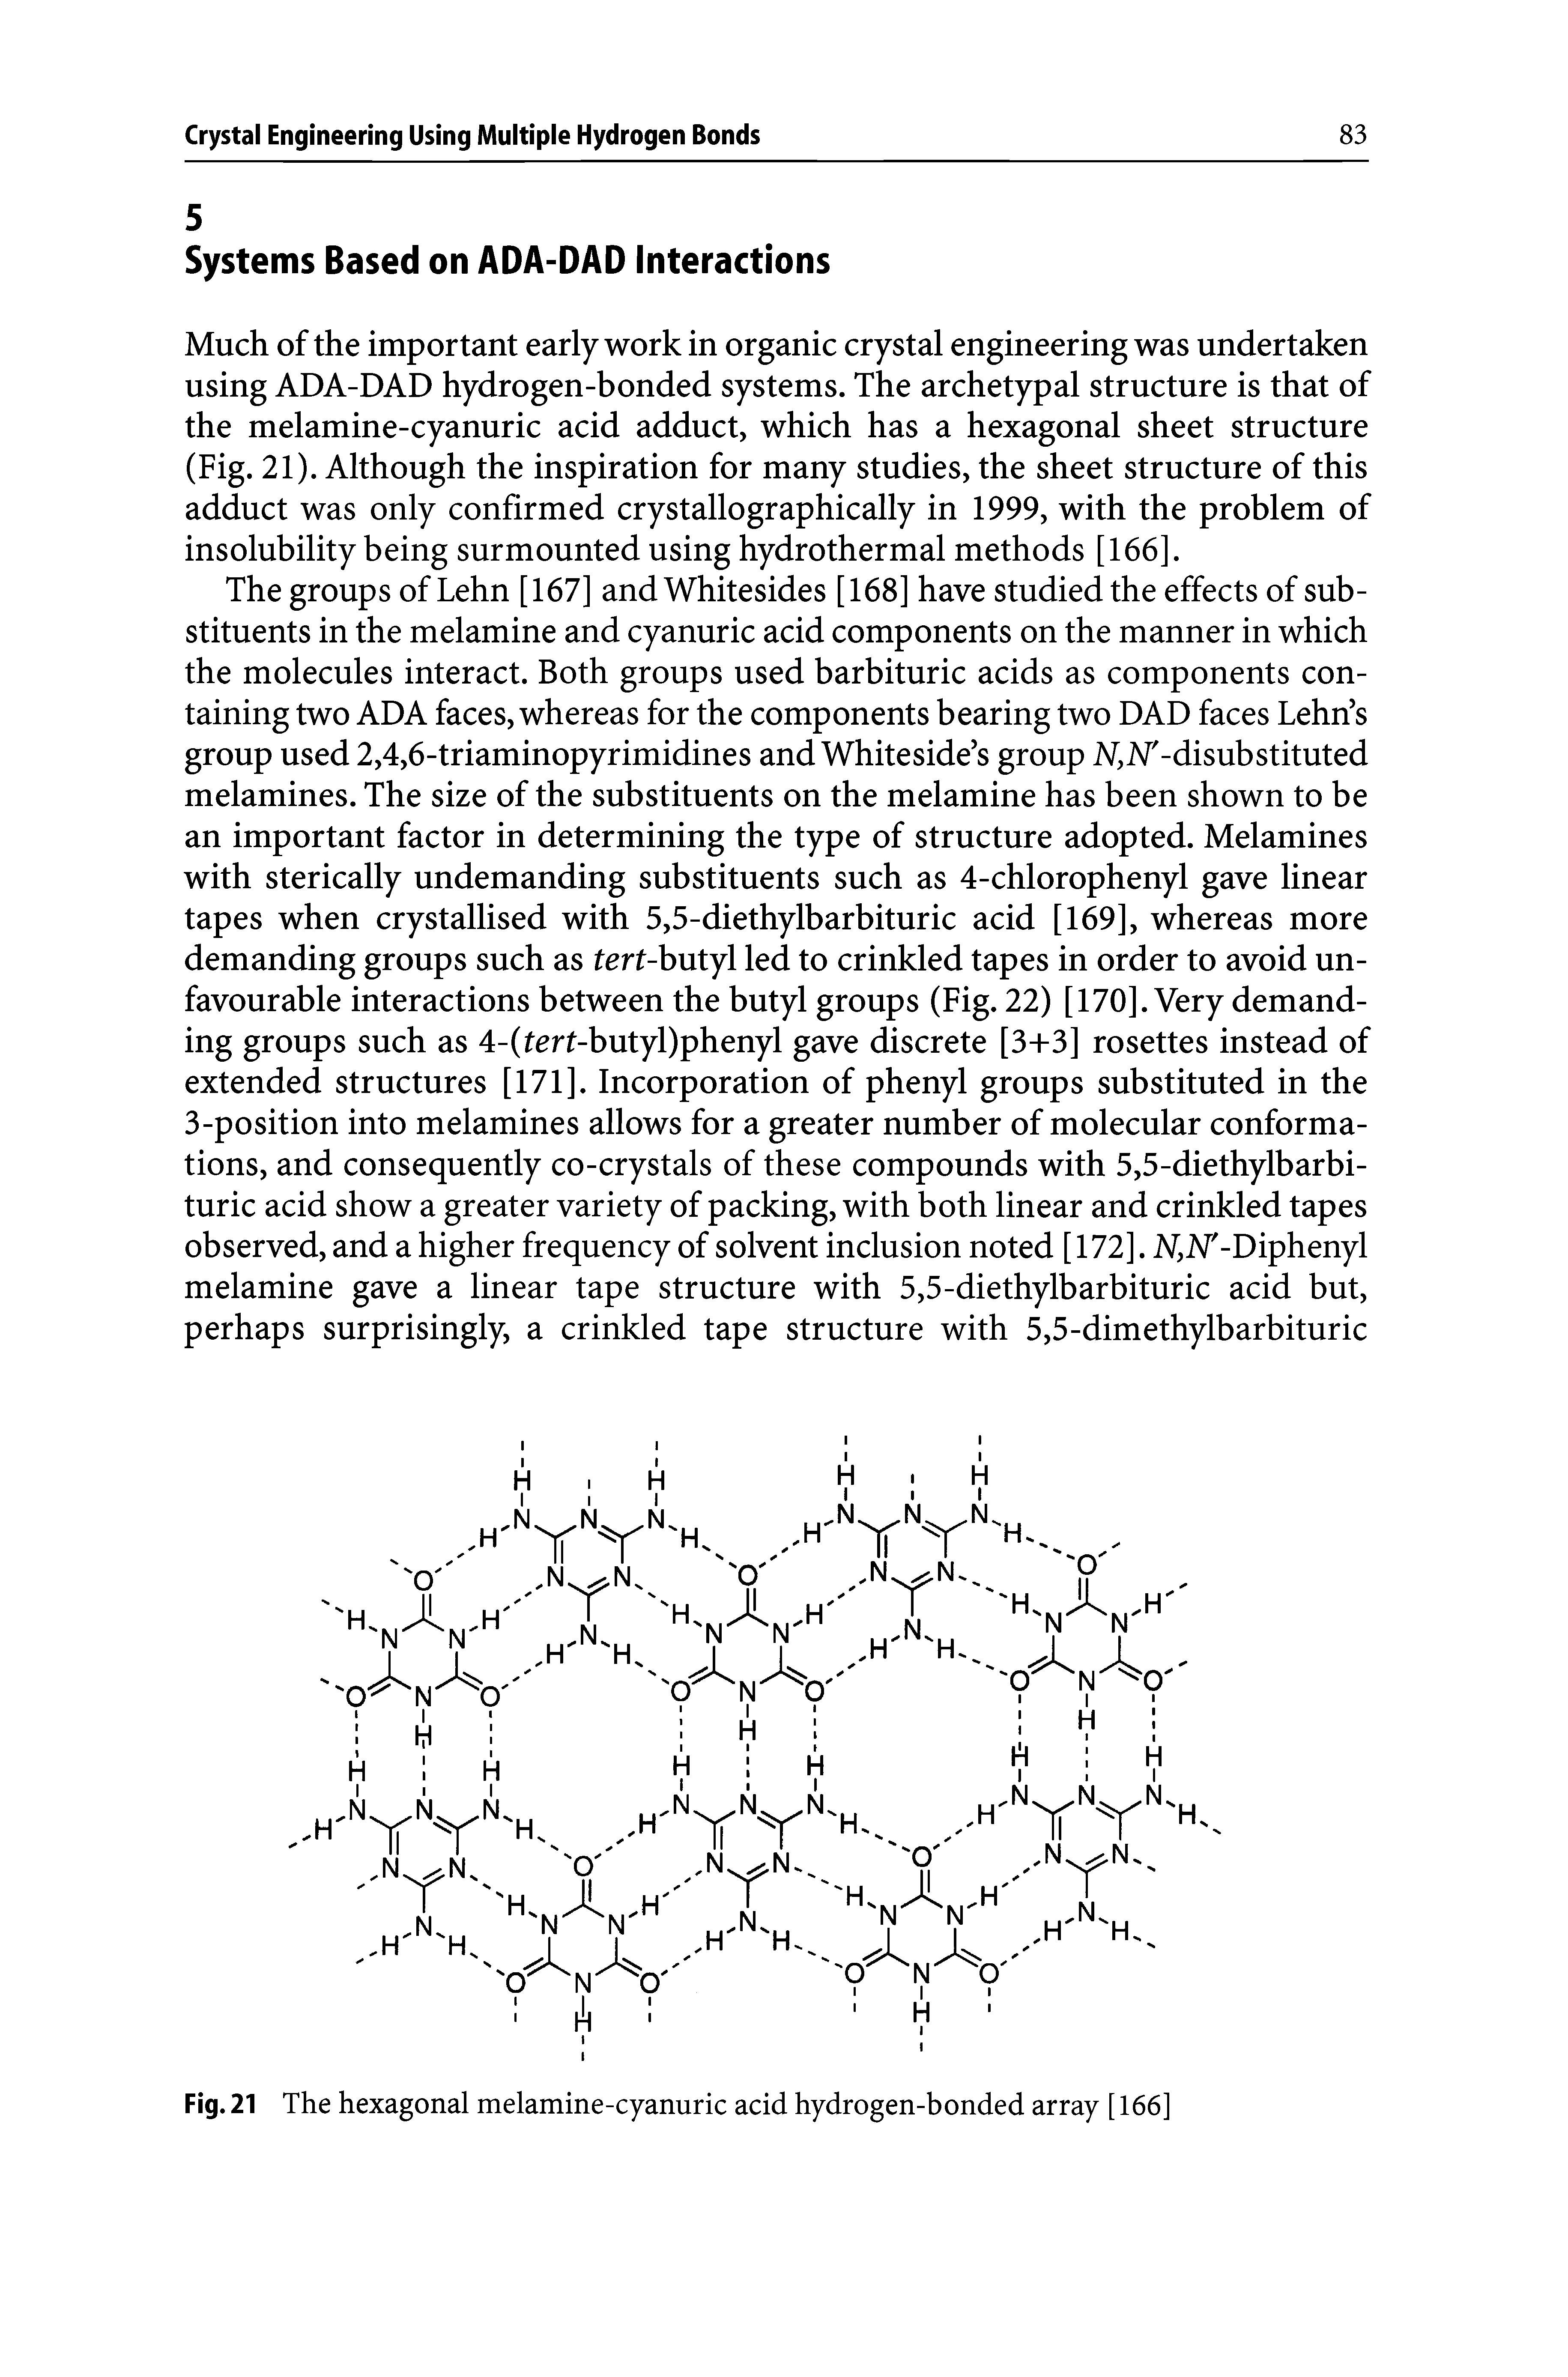 Fig. 21 The hexagonal melamine-cyanuric acid hydrogen-bonded array [ 166]...